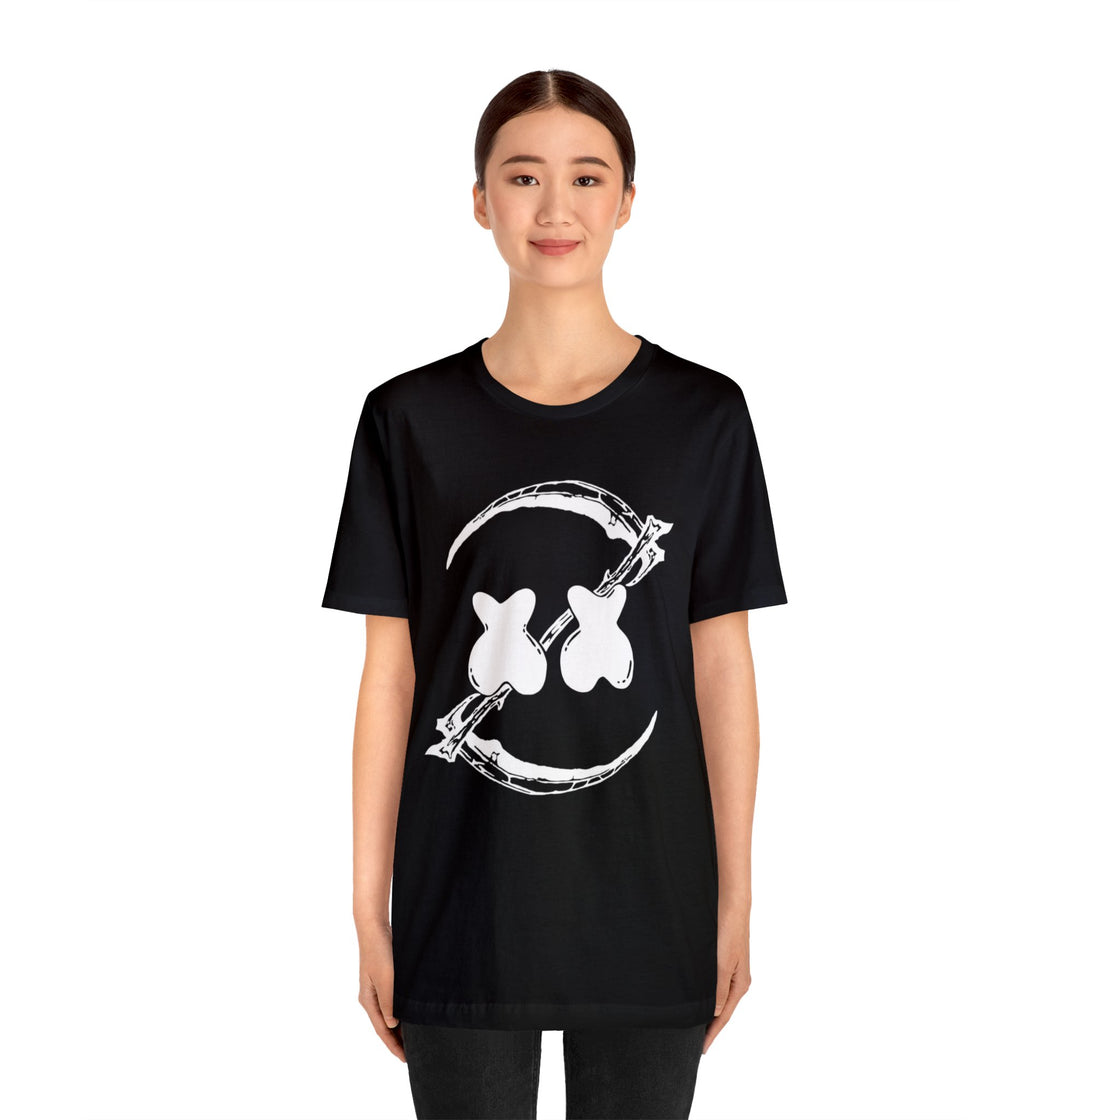 Marshmellow B2B Svdden Death Shirt Unisex Jersey Short Sleeve Tee EDC Vegas